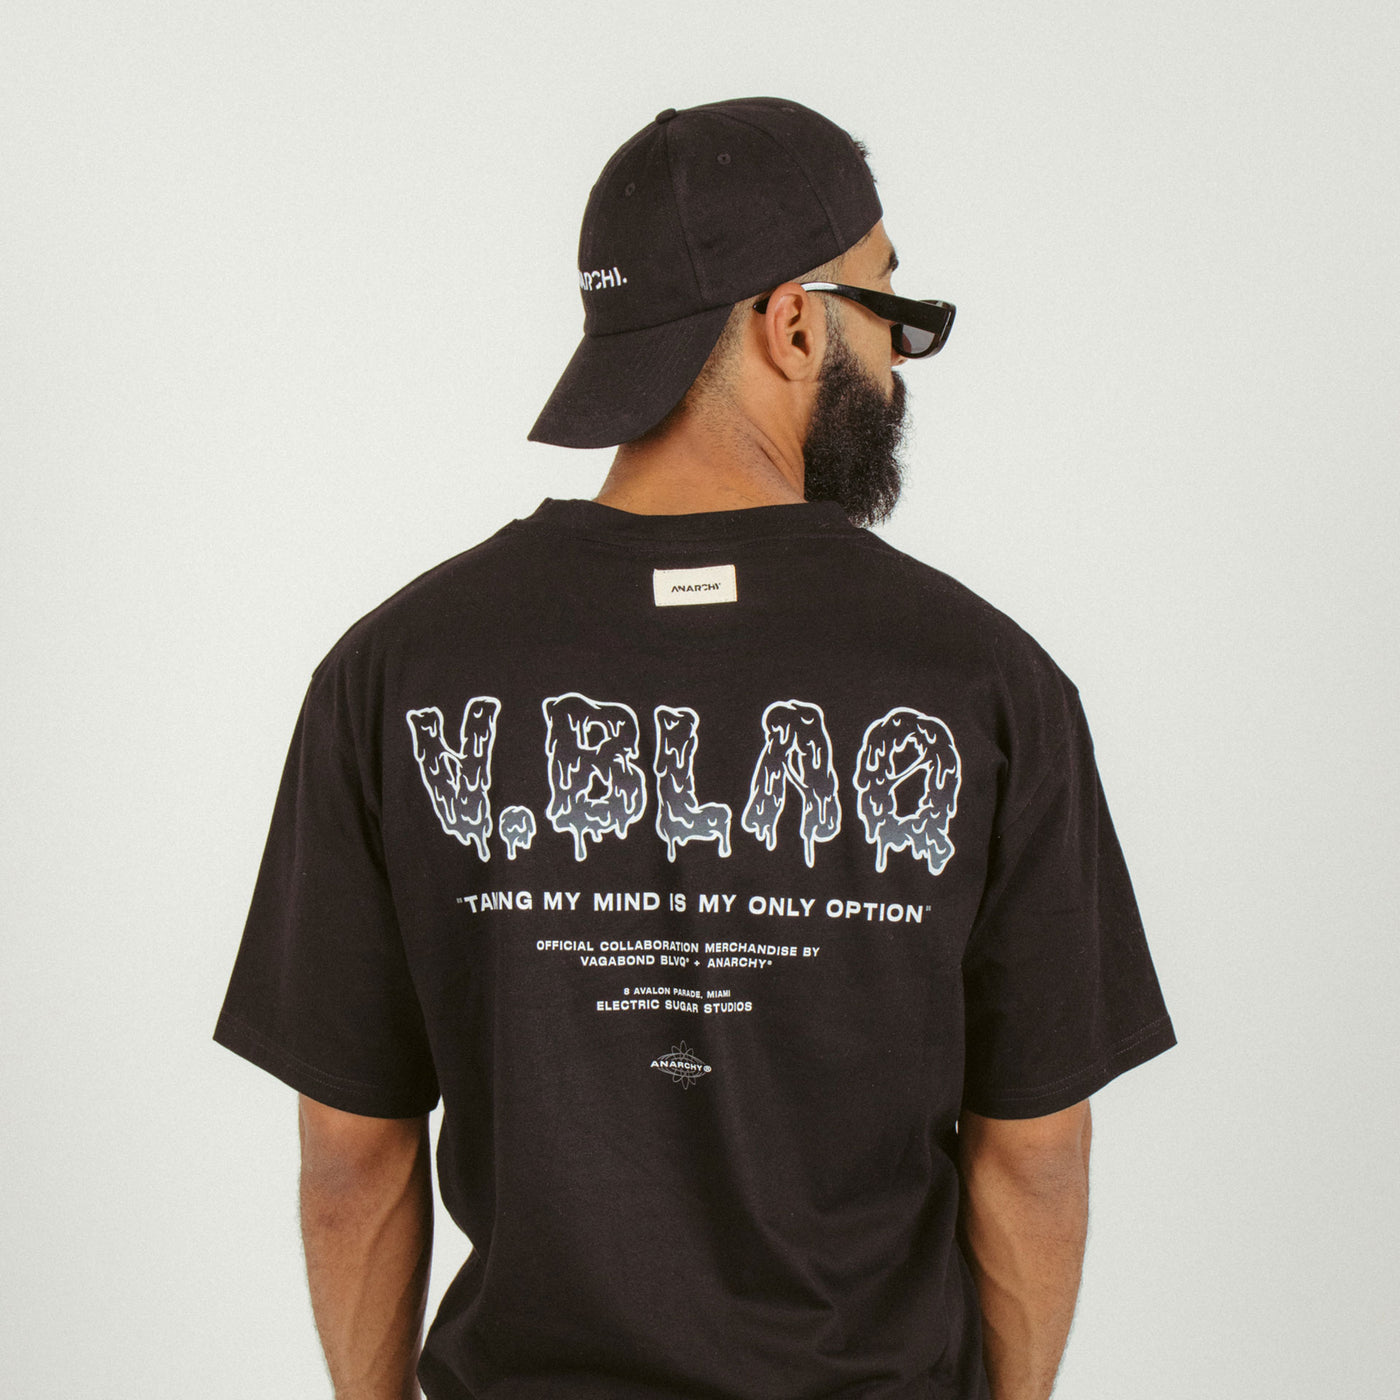 V.BLVQ World Tour T-Shirt - Black